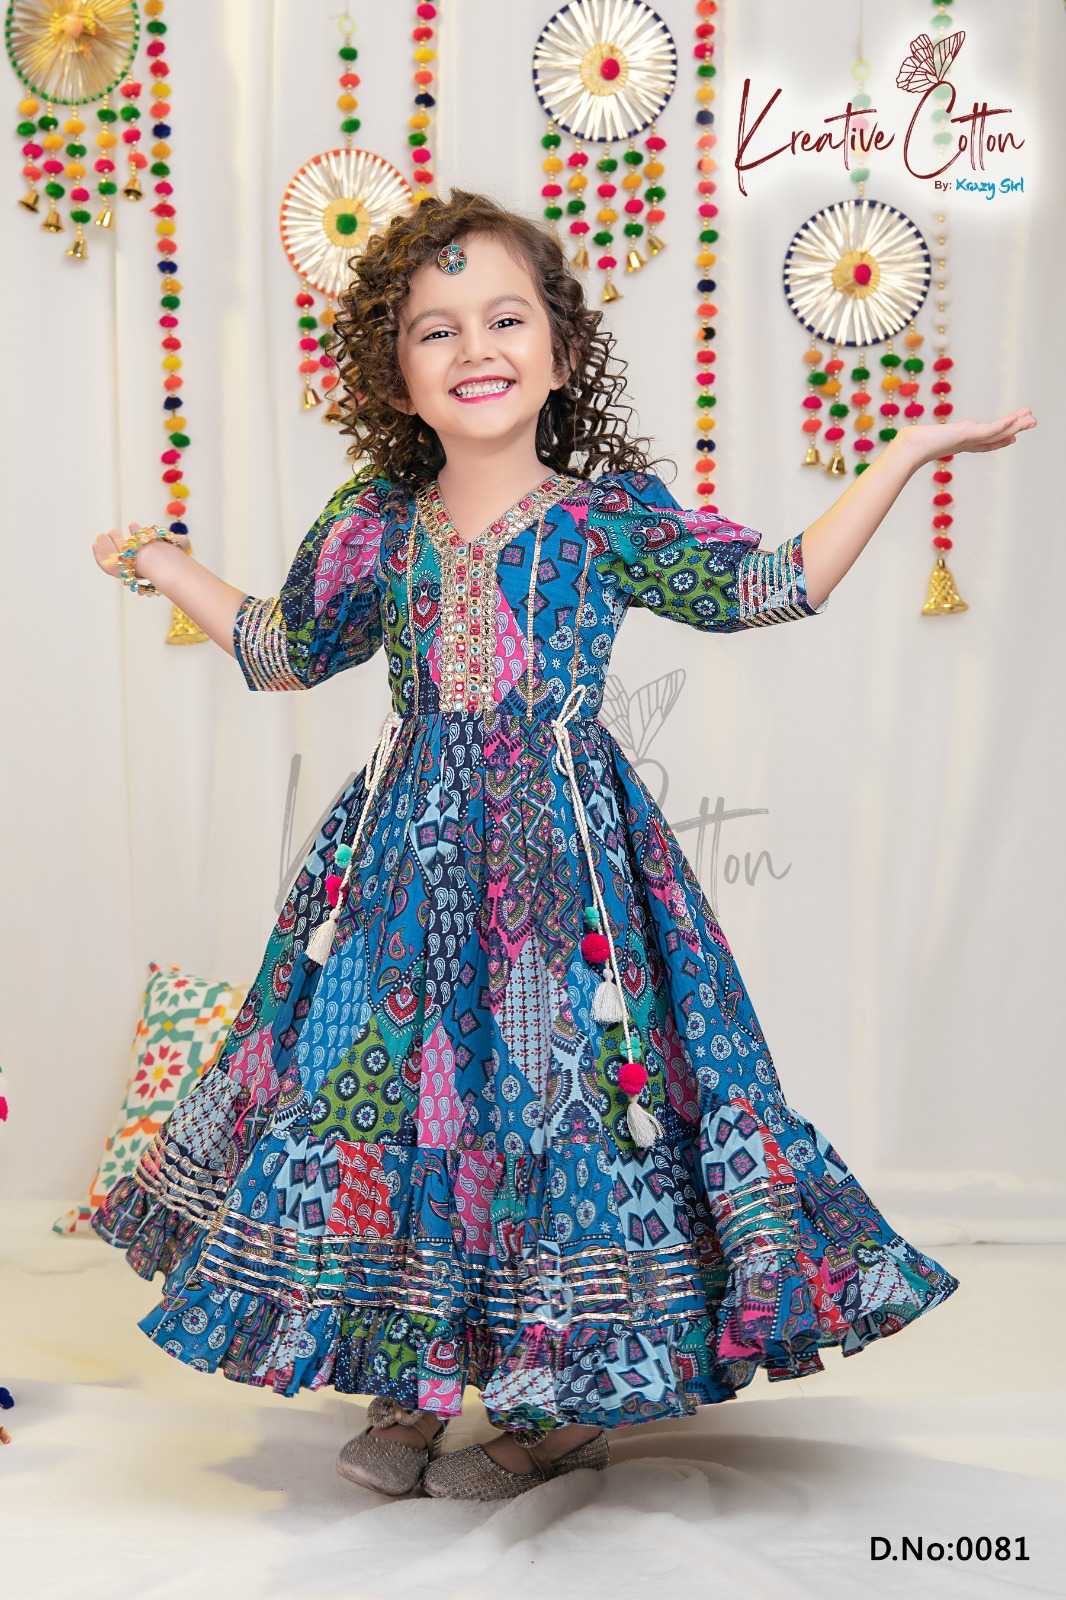 krazy girl part 2 occasion wear cotton comfy designer girls kid wear exclusive dress collection 